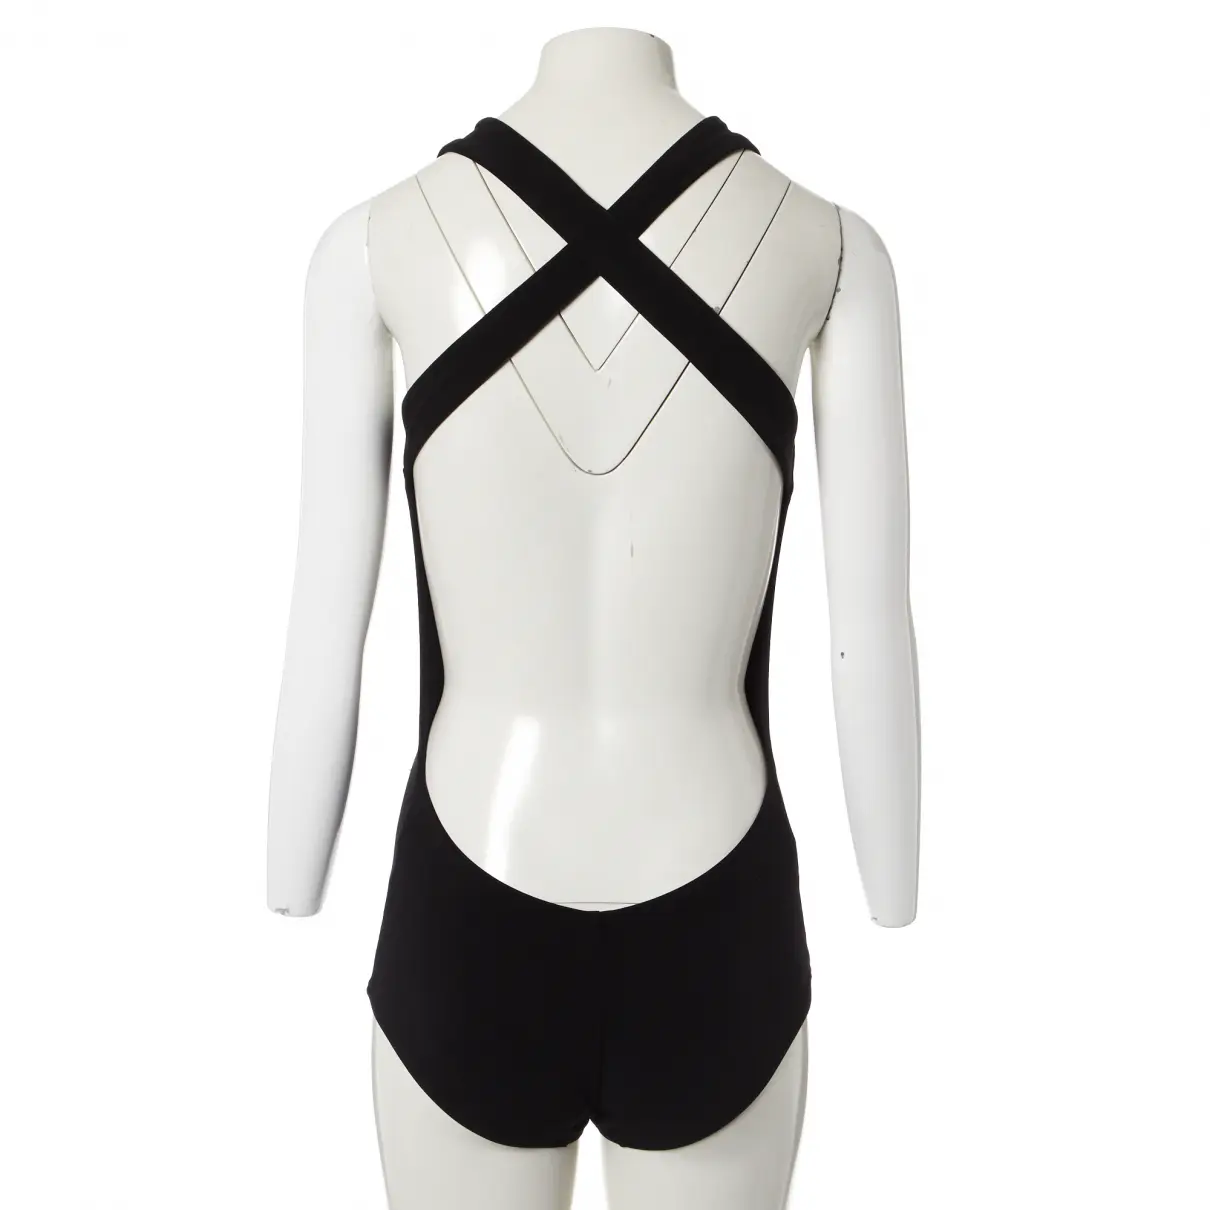 Buy Louis Vuitton One-piece swimsuit online